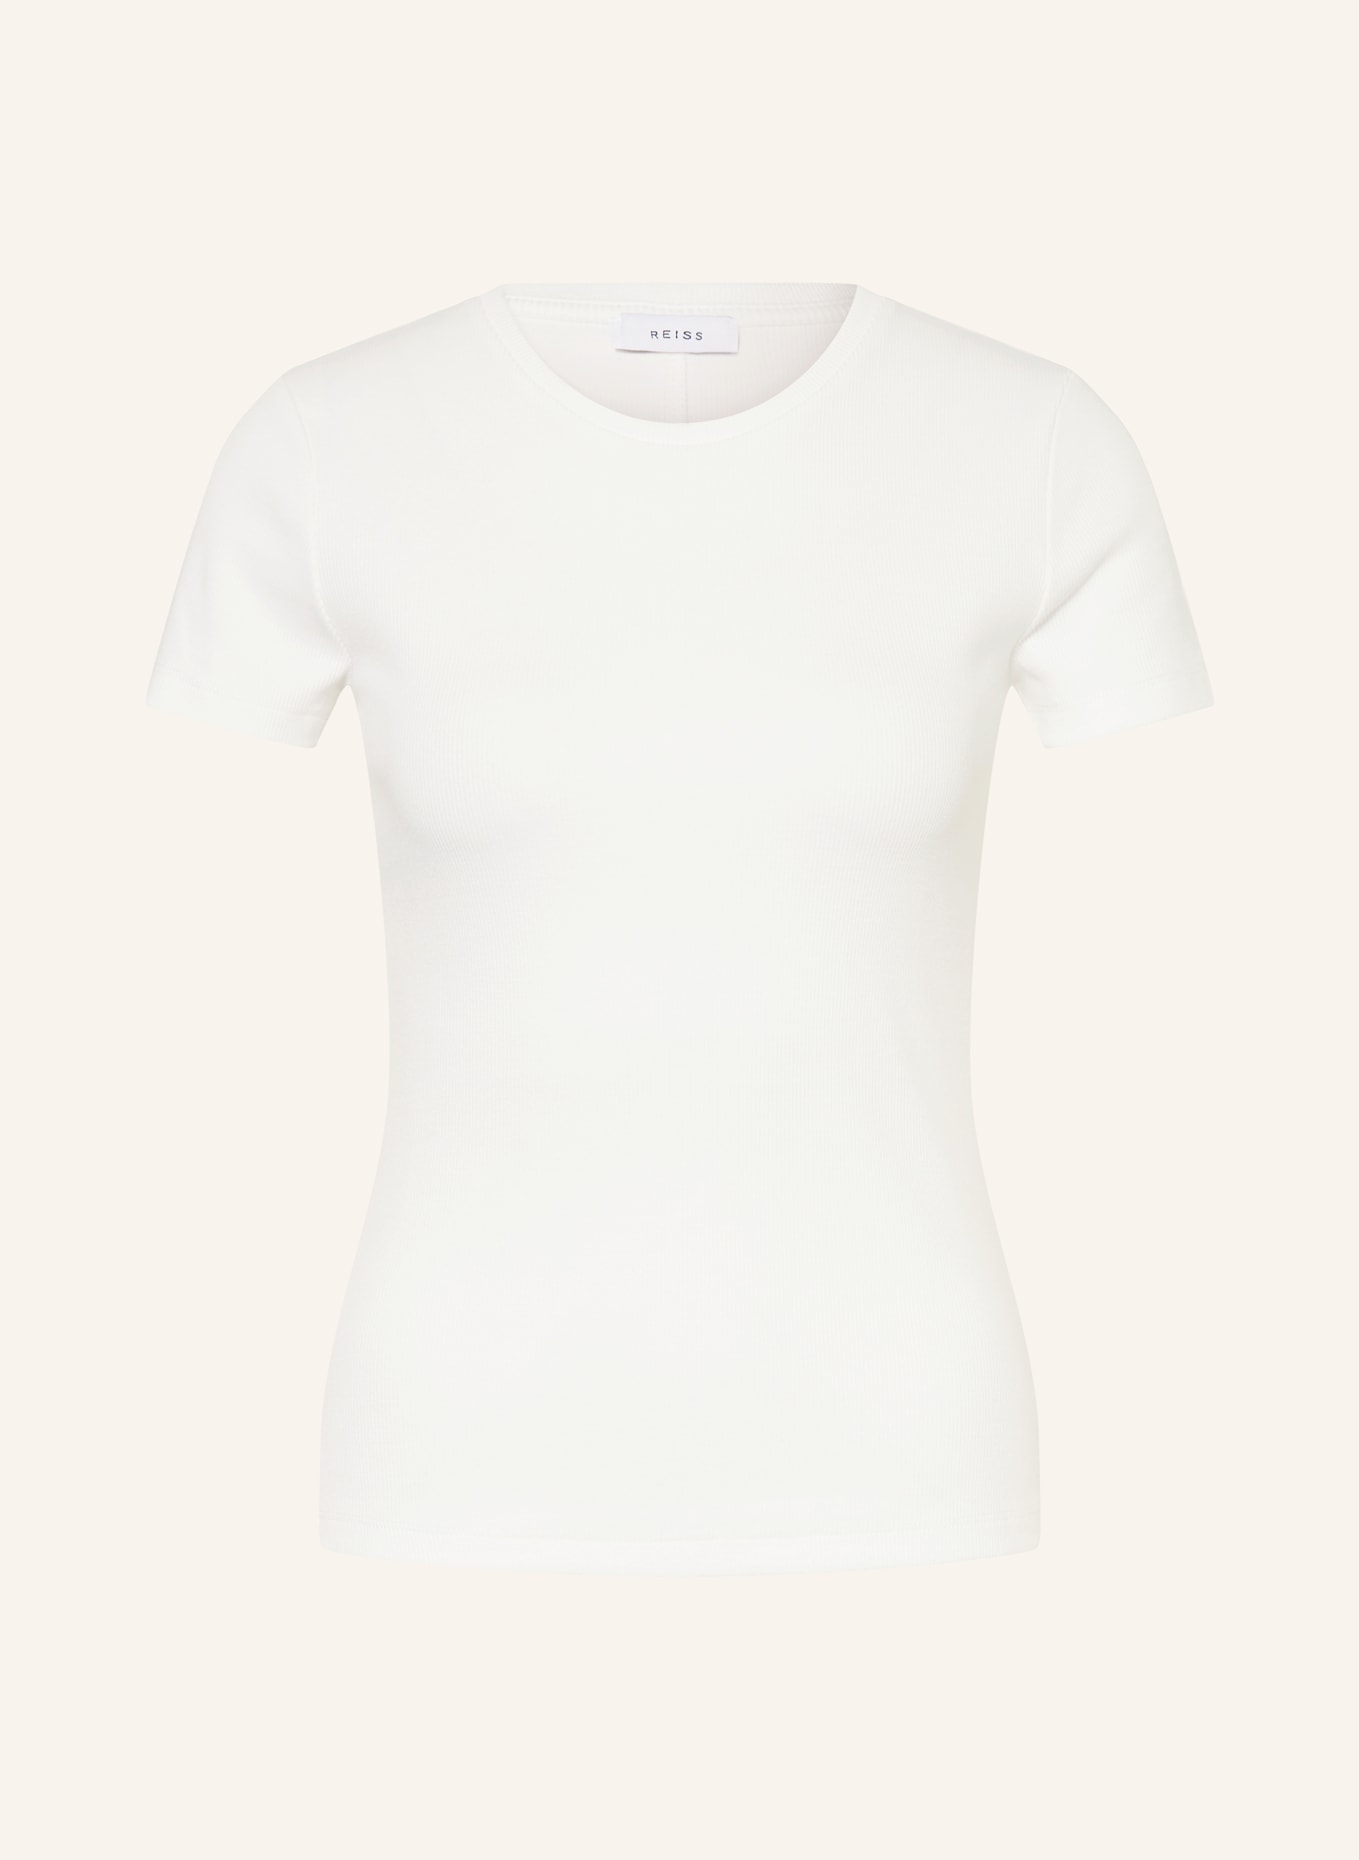 REISS T-Shirt VICTORIA, Farbe: WEISS (Bild 1)